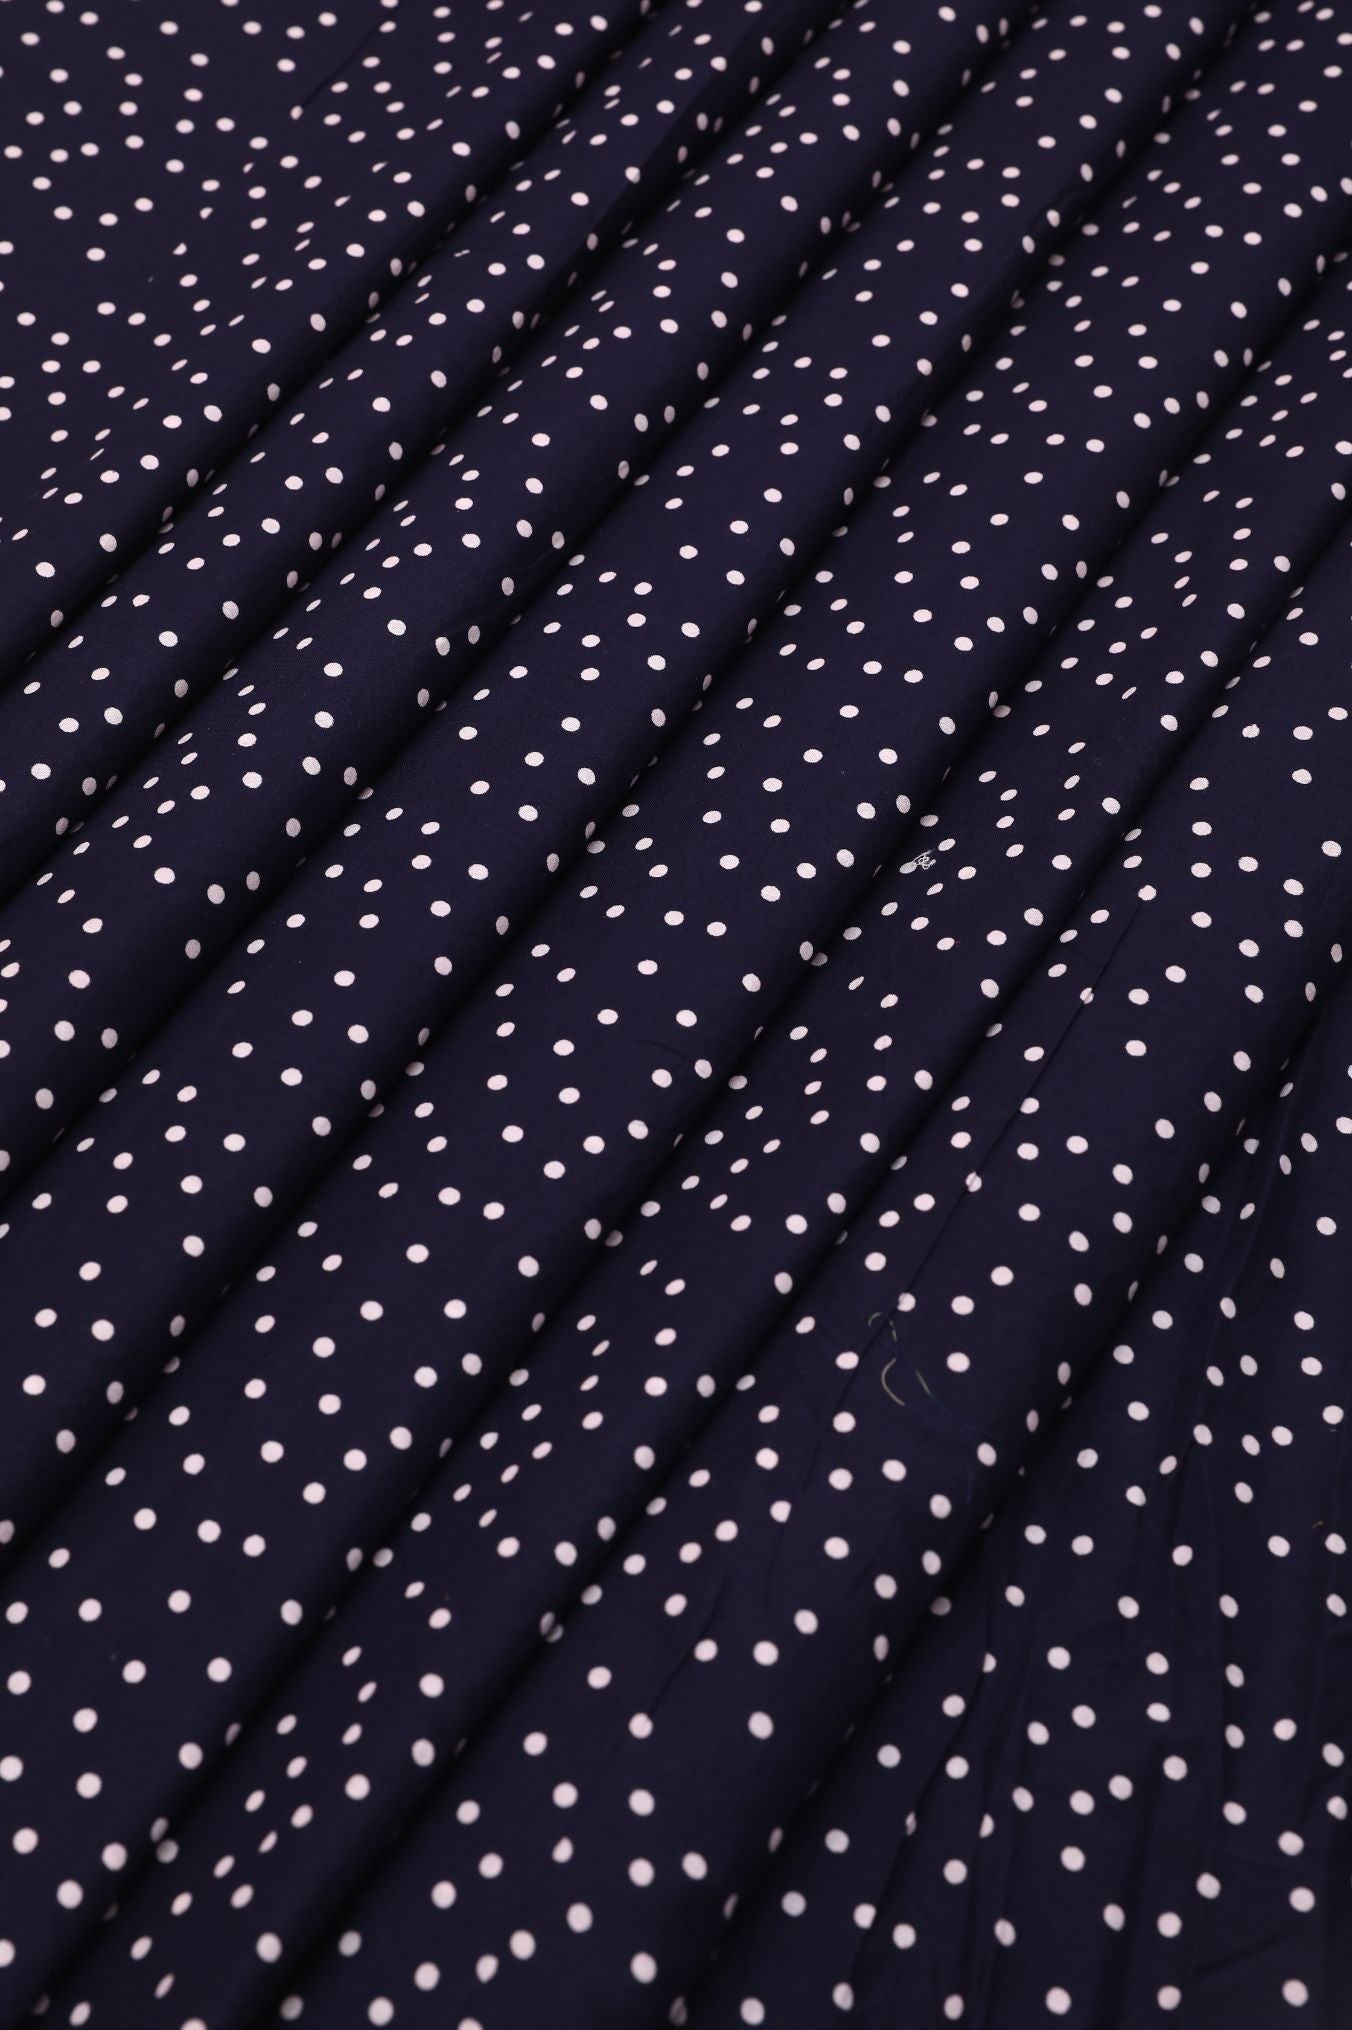 Black and White Tiny Polka dots Cotton Fabric